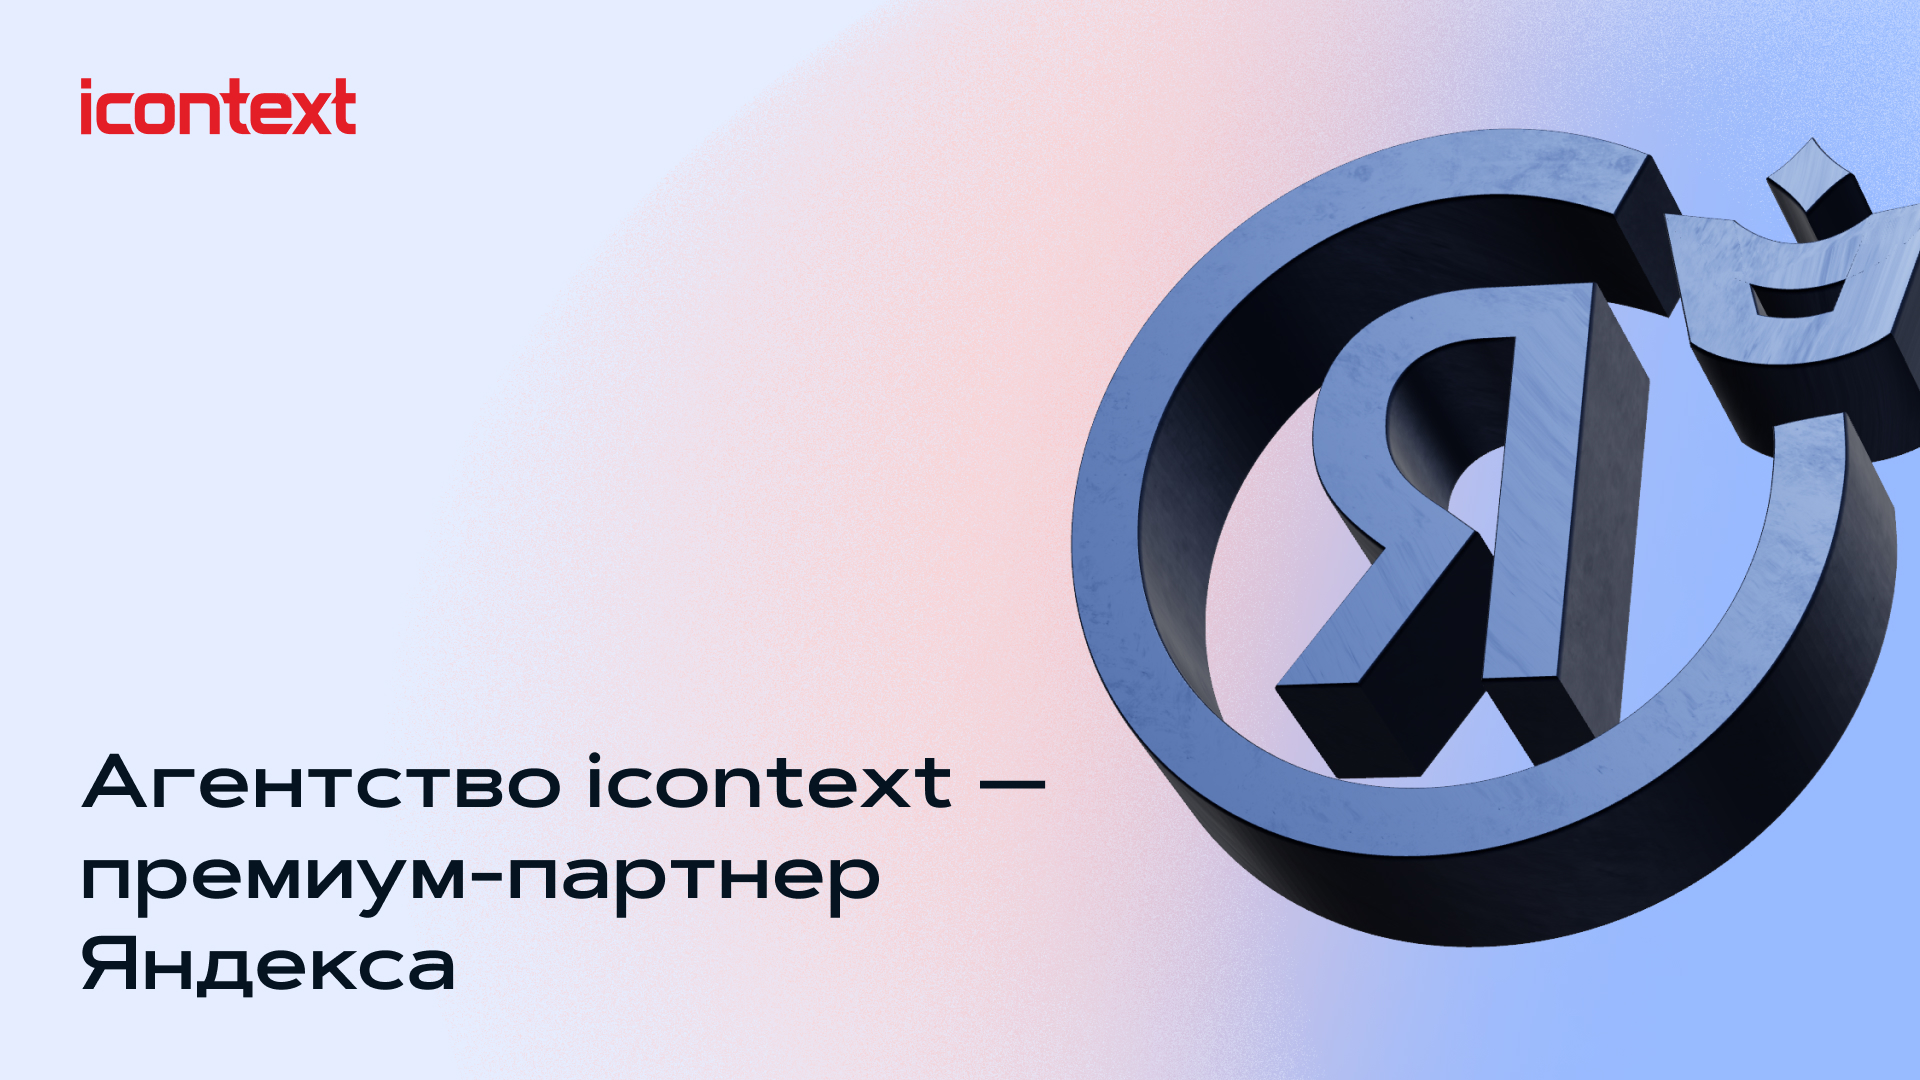 Digital-агентство icontext подтвердило статус премиум-партнёра Яндекса